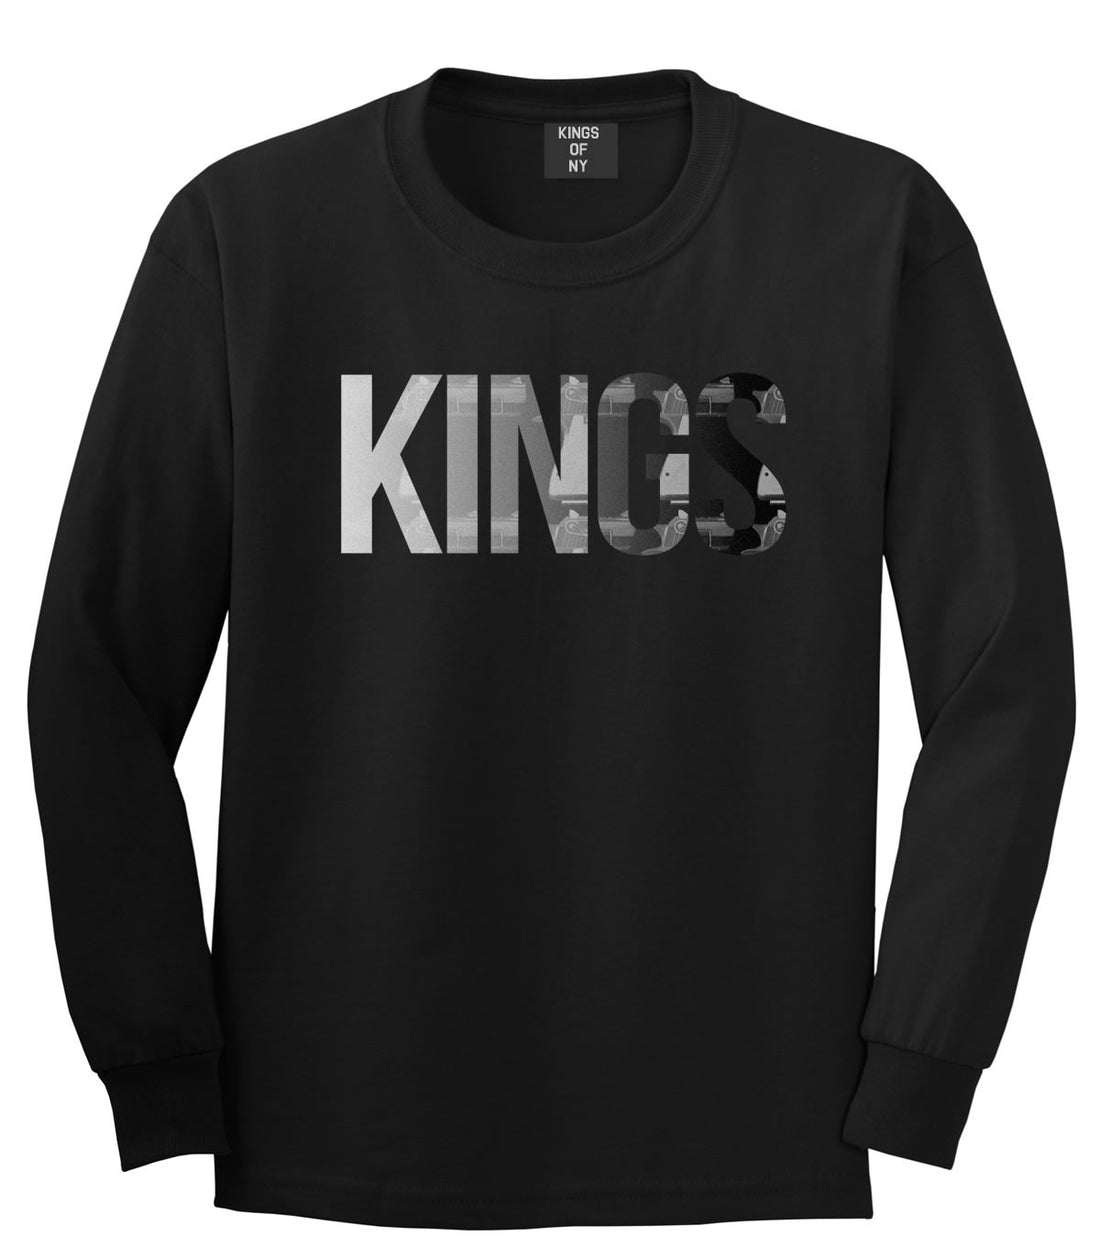 KINGS Gun Pattern Print Long Sleeve T-Shirt in Black by Kings Of NY